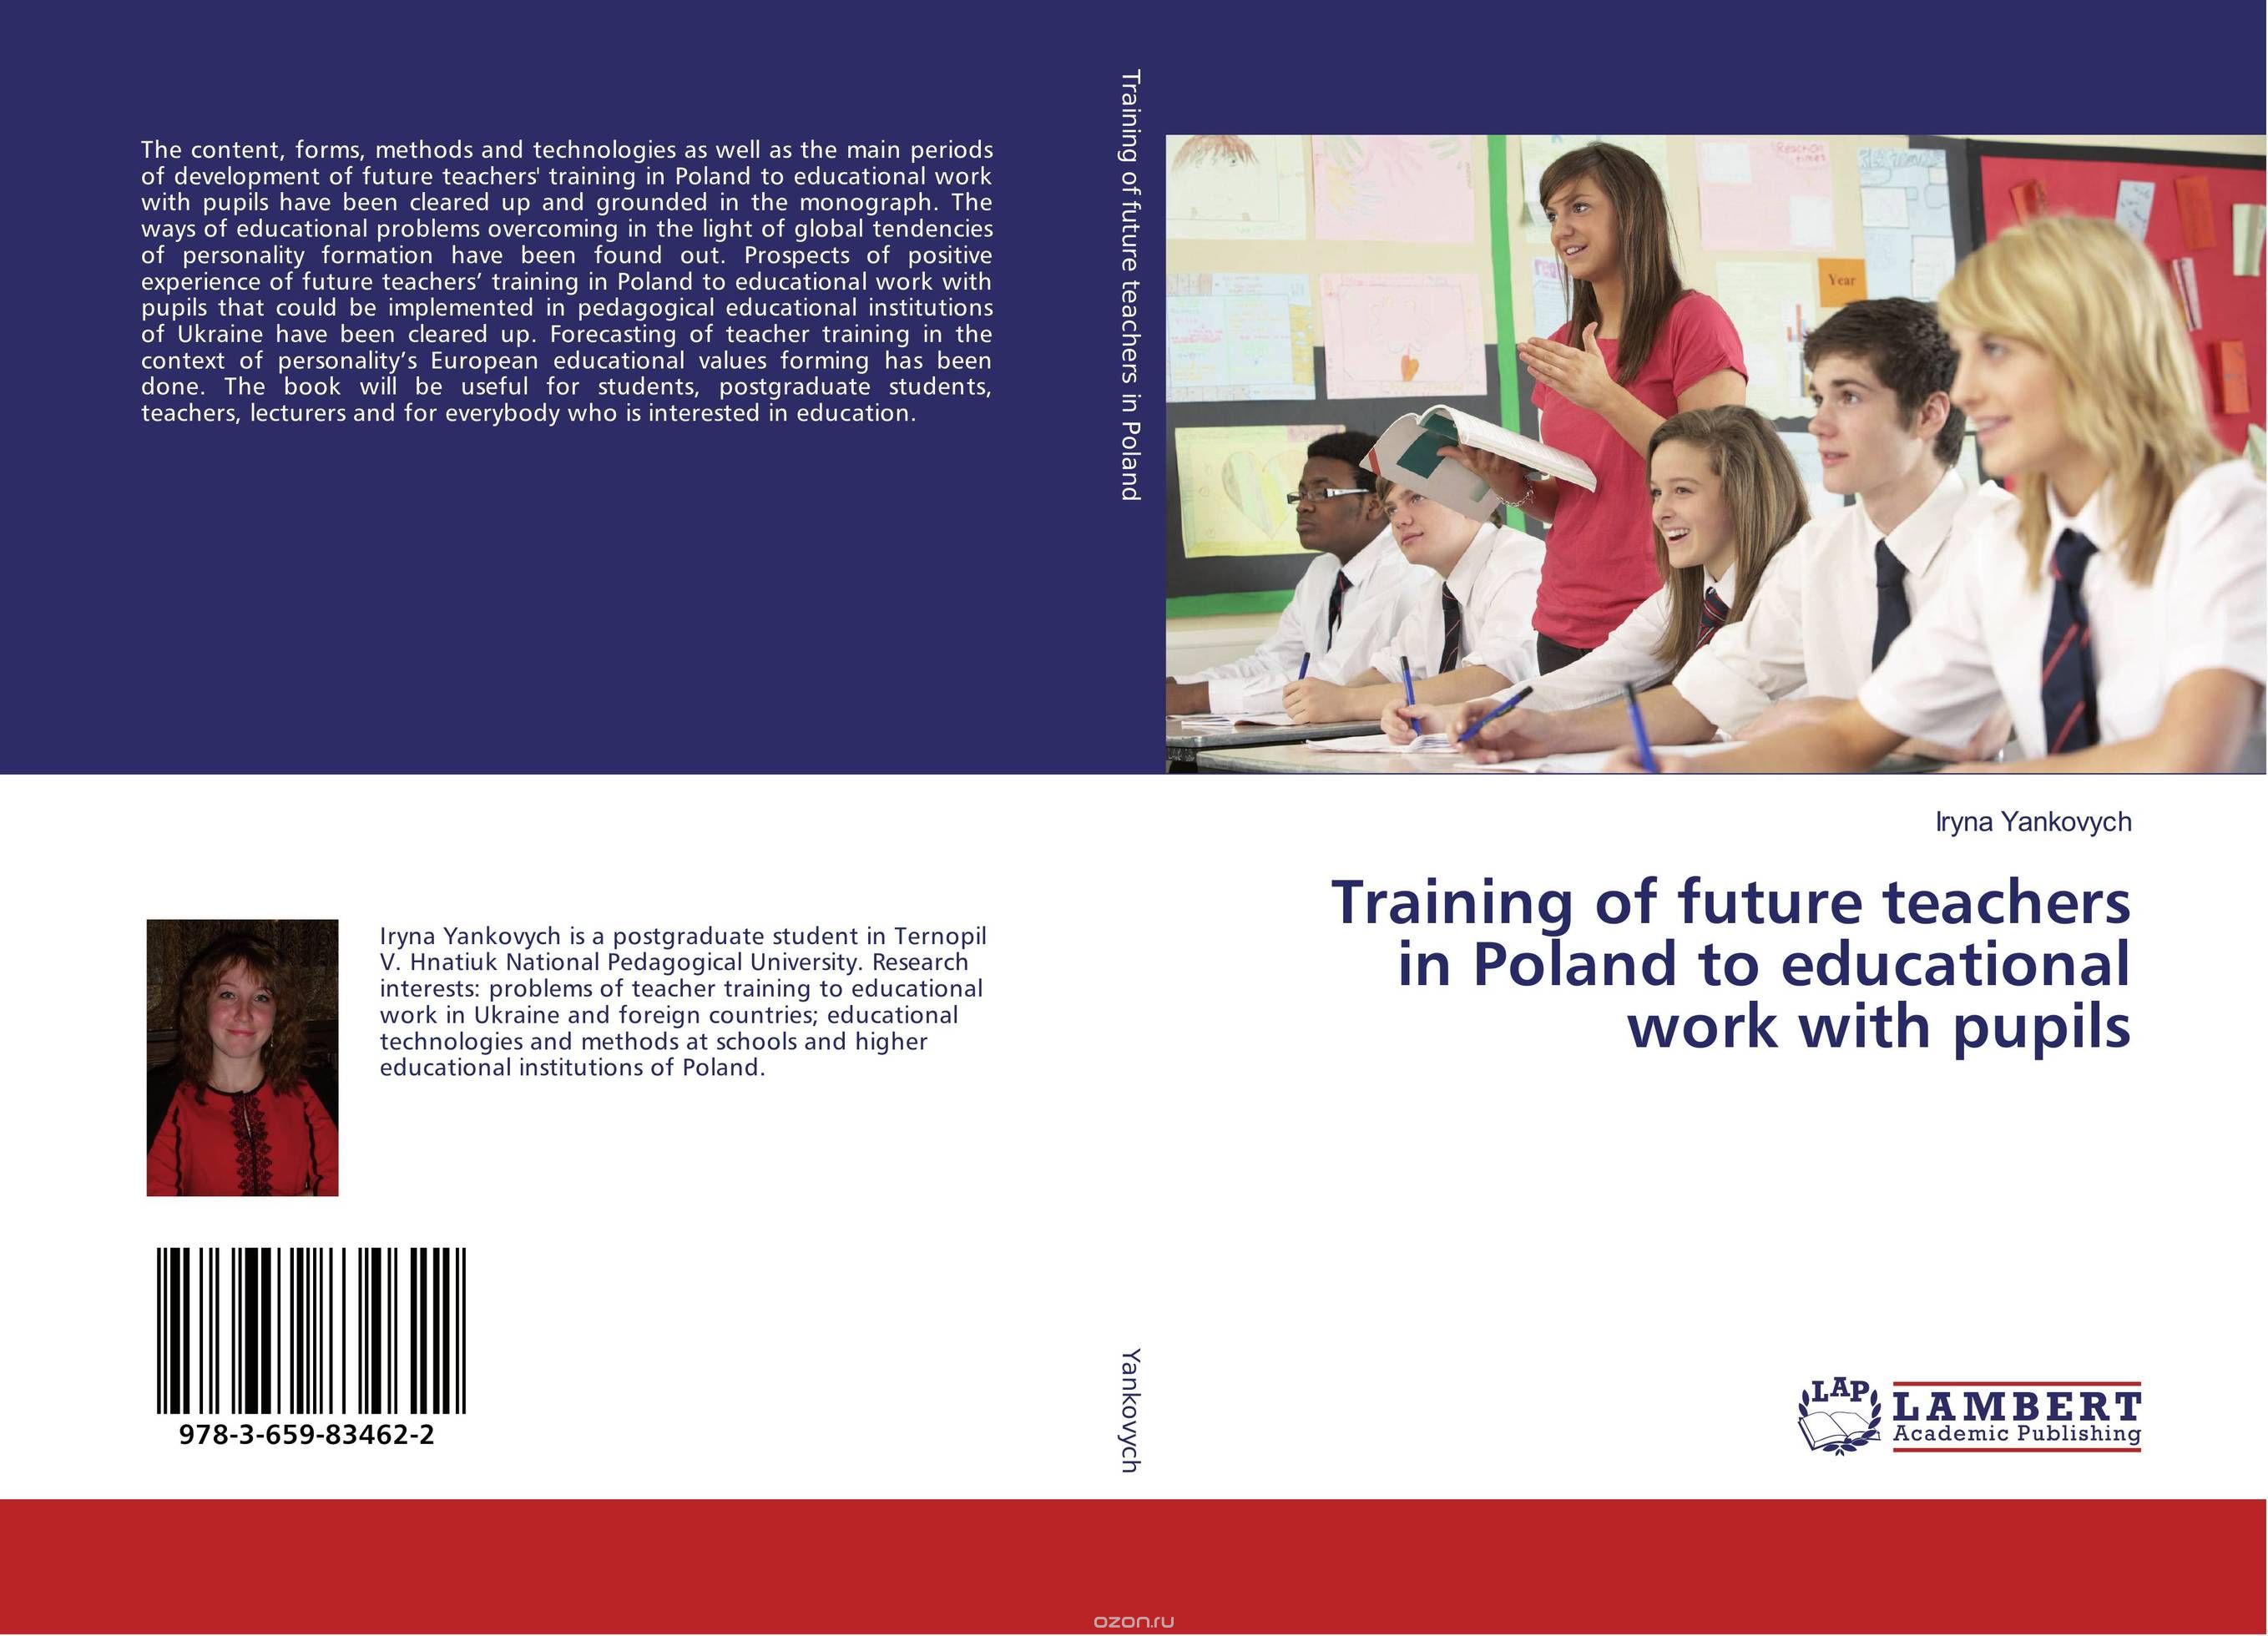 Скачать книгу "Training of future teachers in Poland to educational work with pupils"